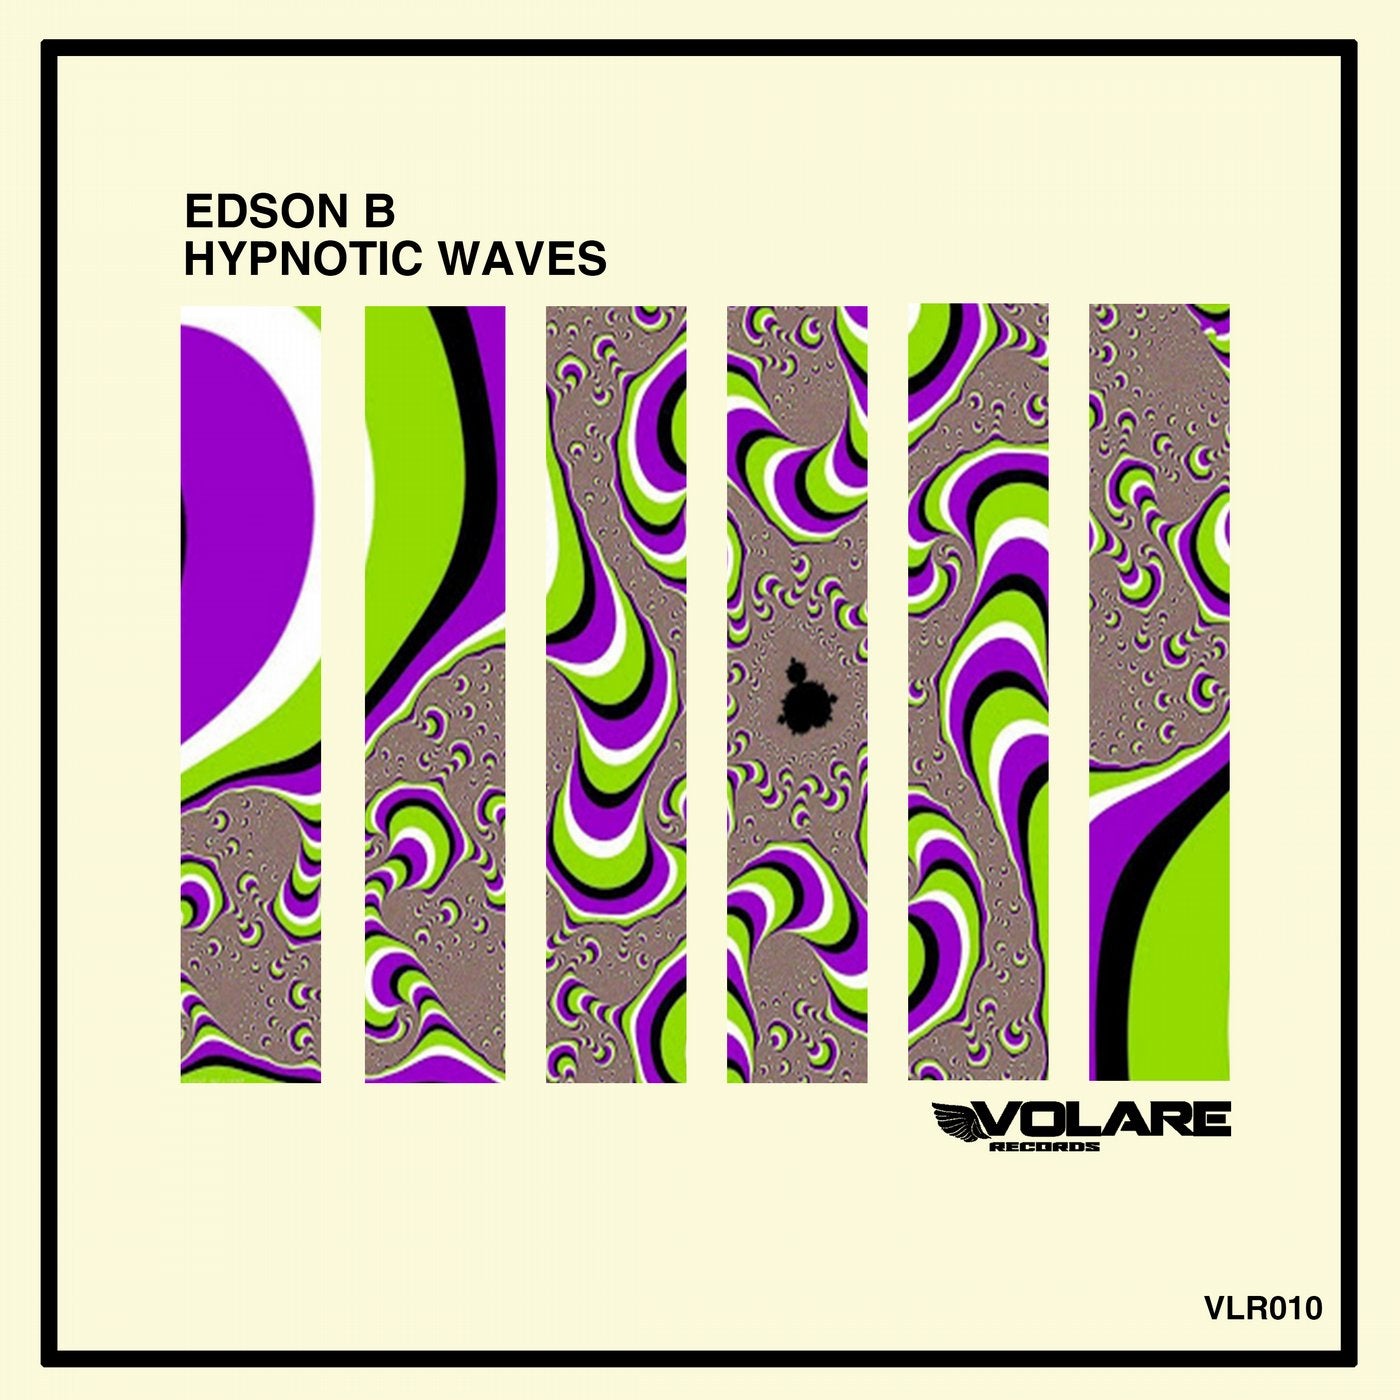 Hypnotic Waves